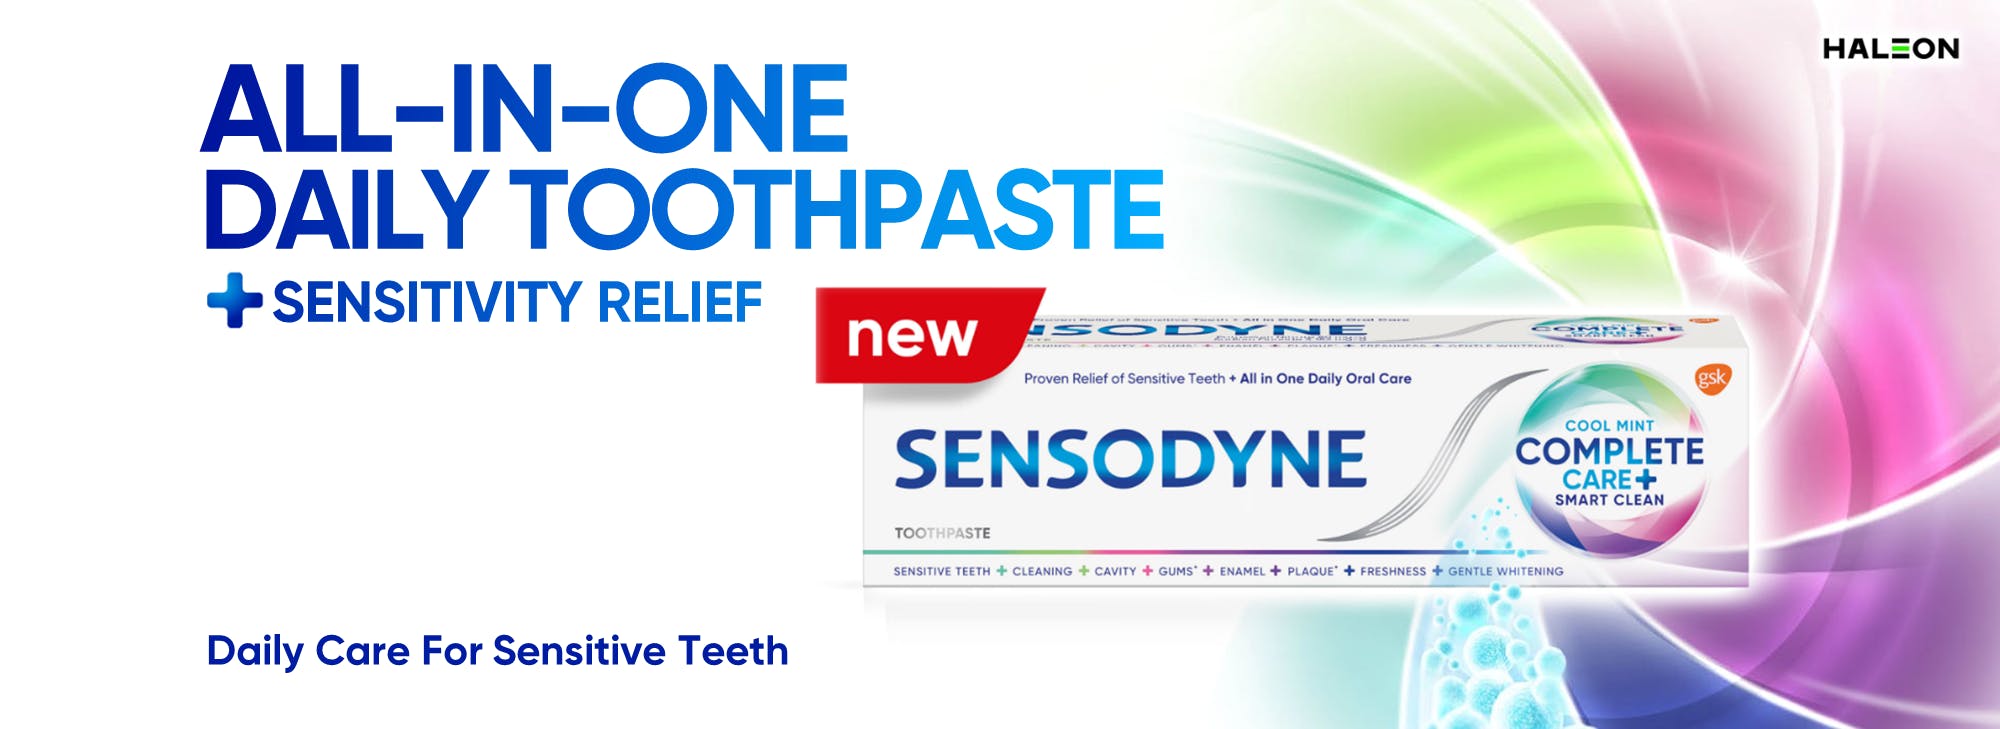 Sensodyne Cool Mint Complete care+ Smart Clean